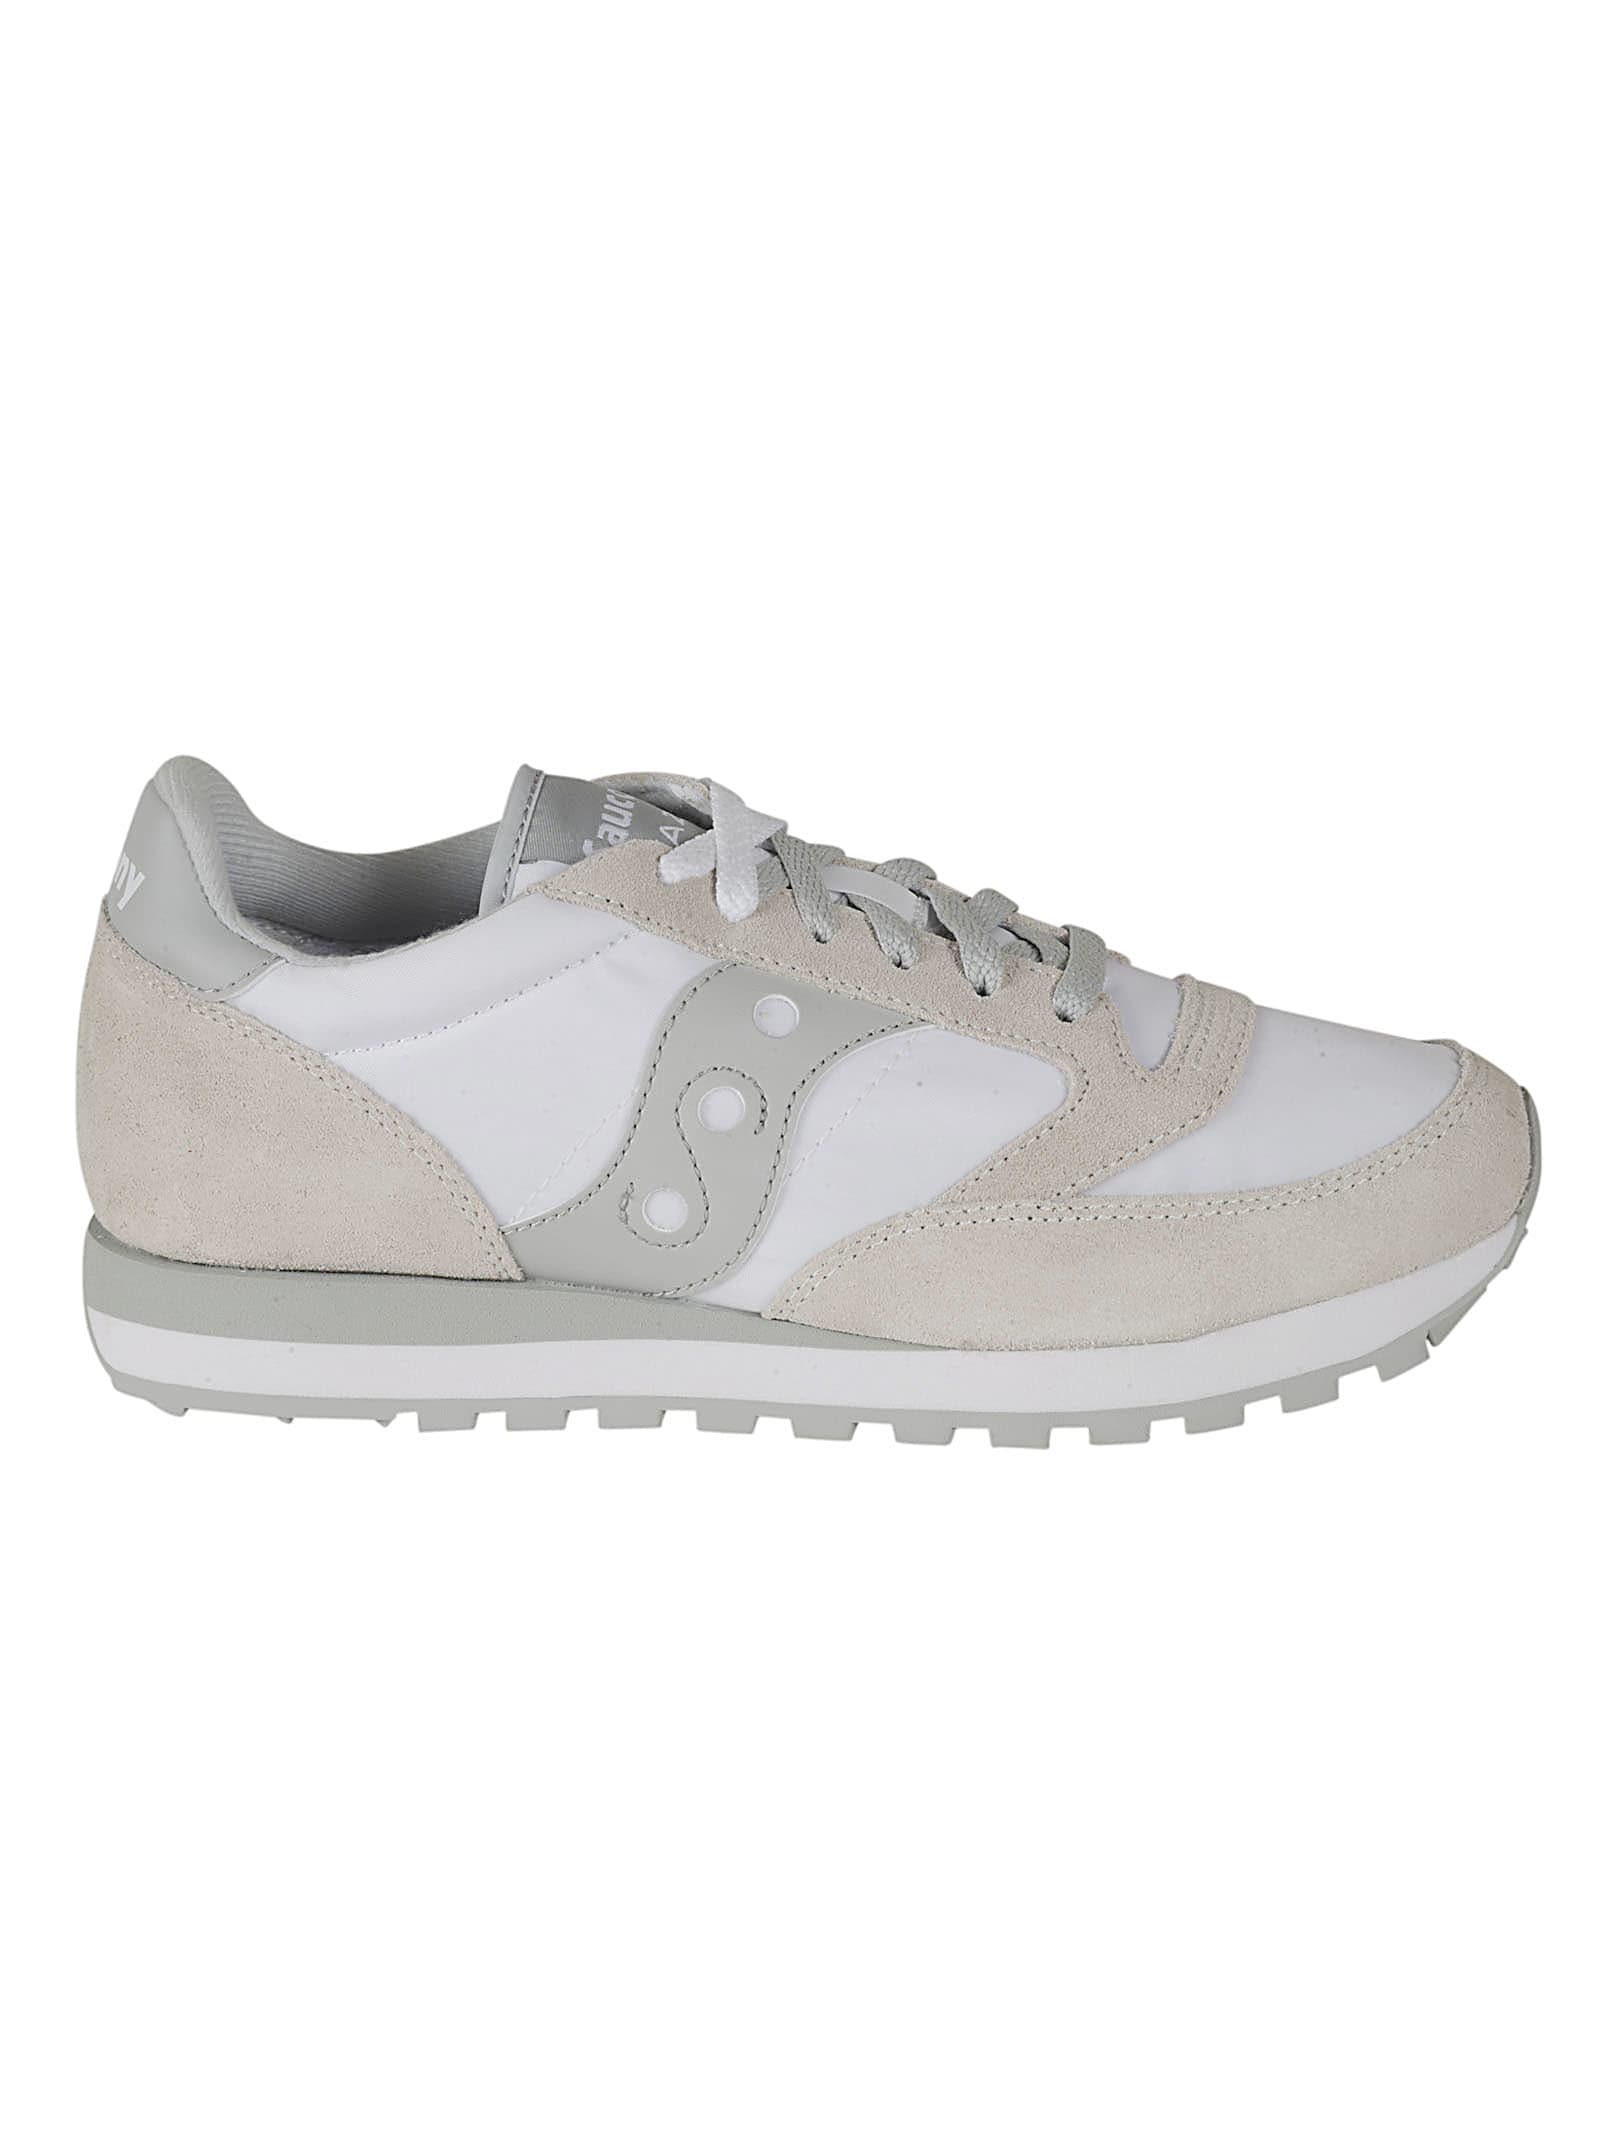 Shop Saucony Jazz Original Sneakers In White/grey